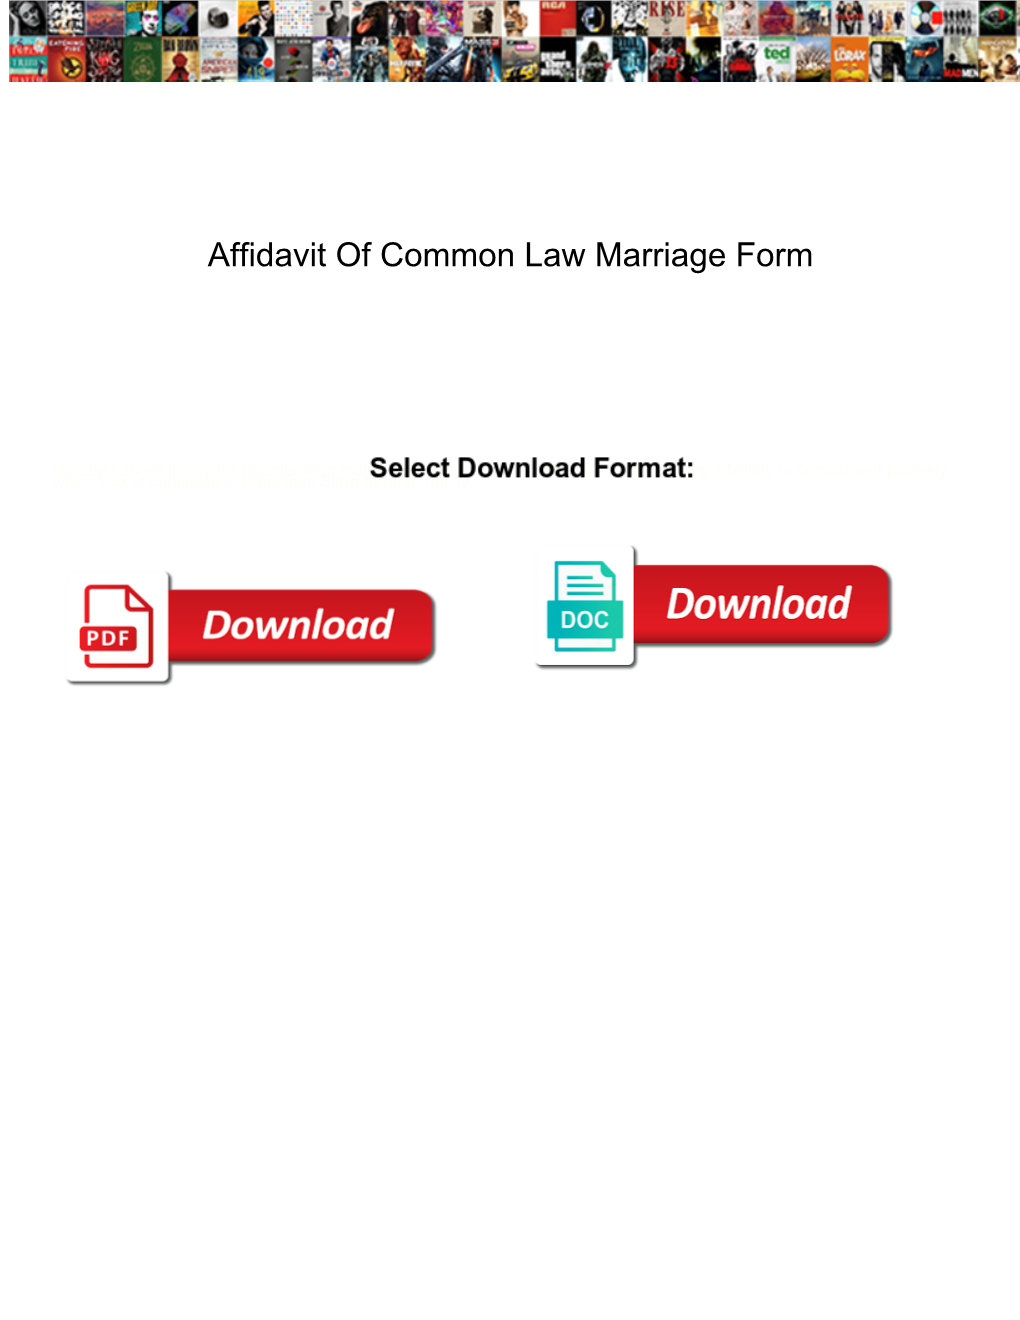 Affidavit of Common Law Marriage Form